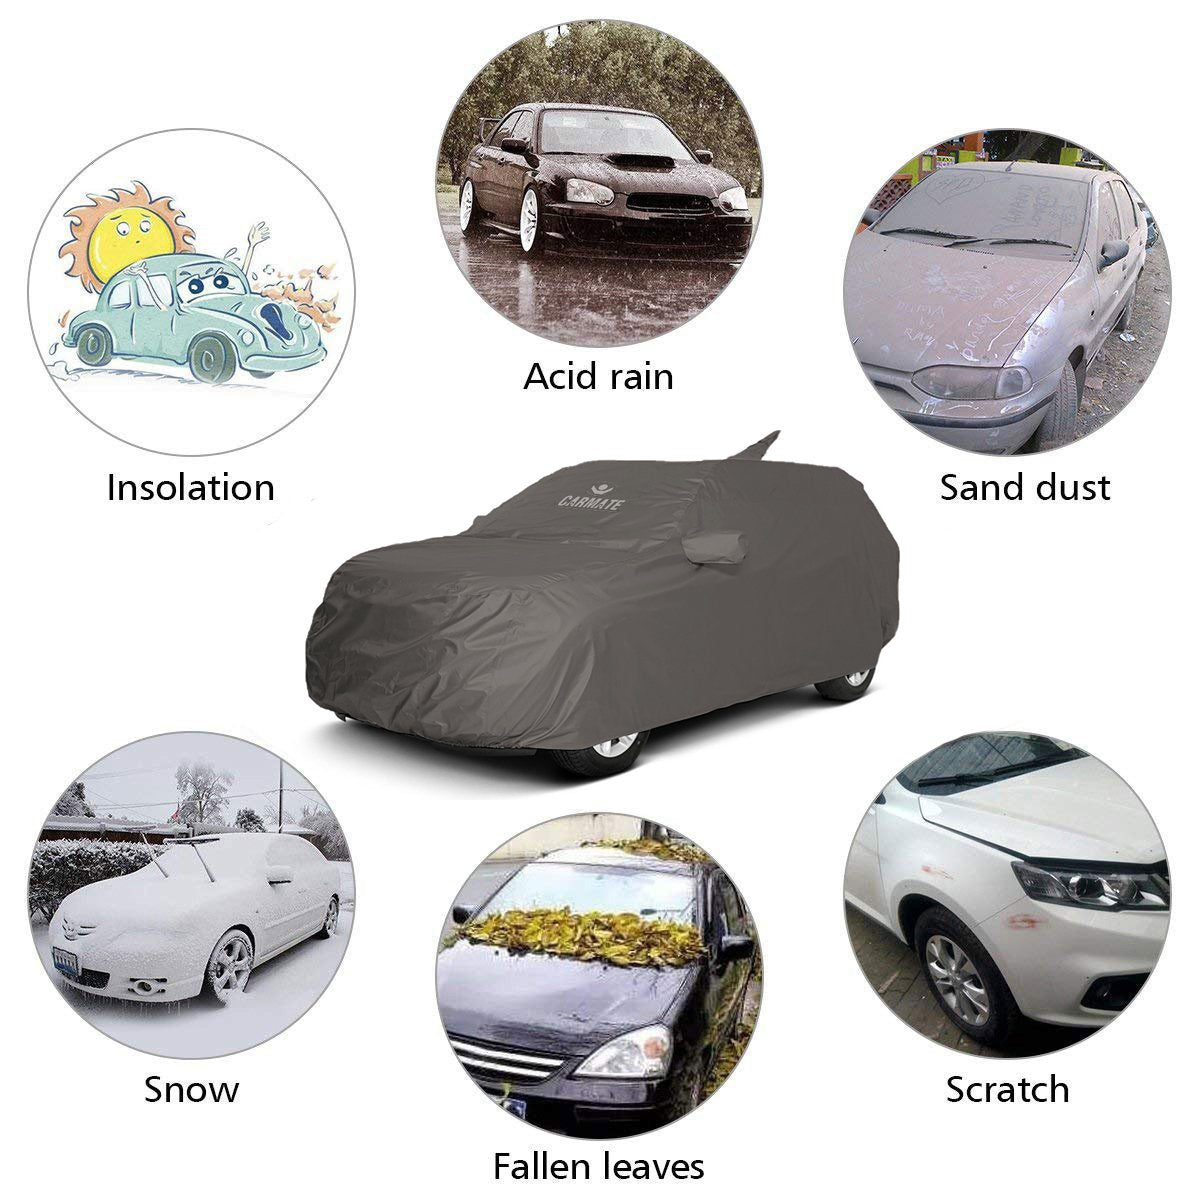 Carmate Car Body Cover 100% Waterproof Pride (Grey) for Chevrolet - Captiva - CARMATE®